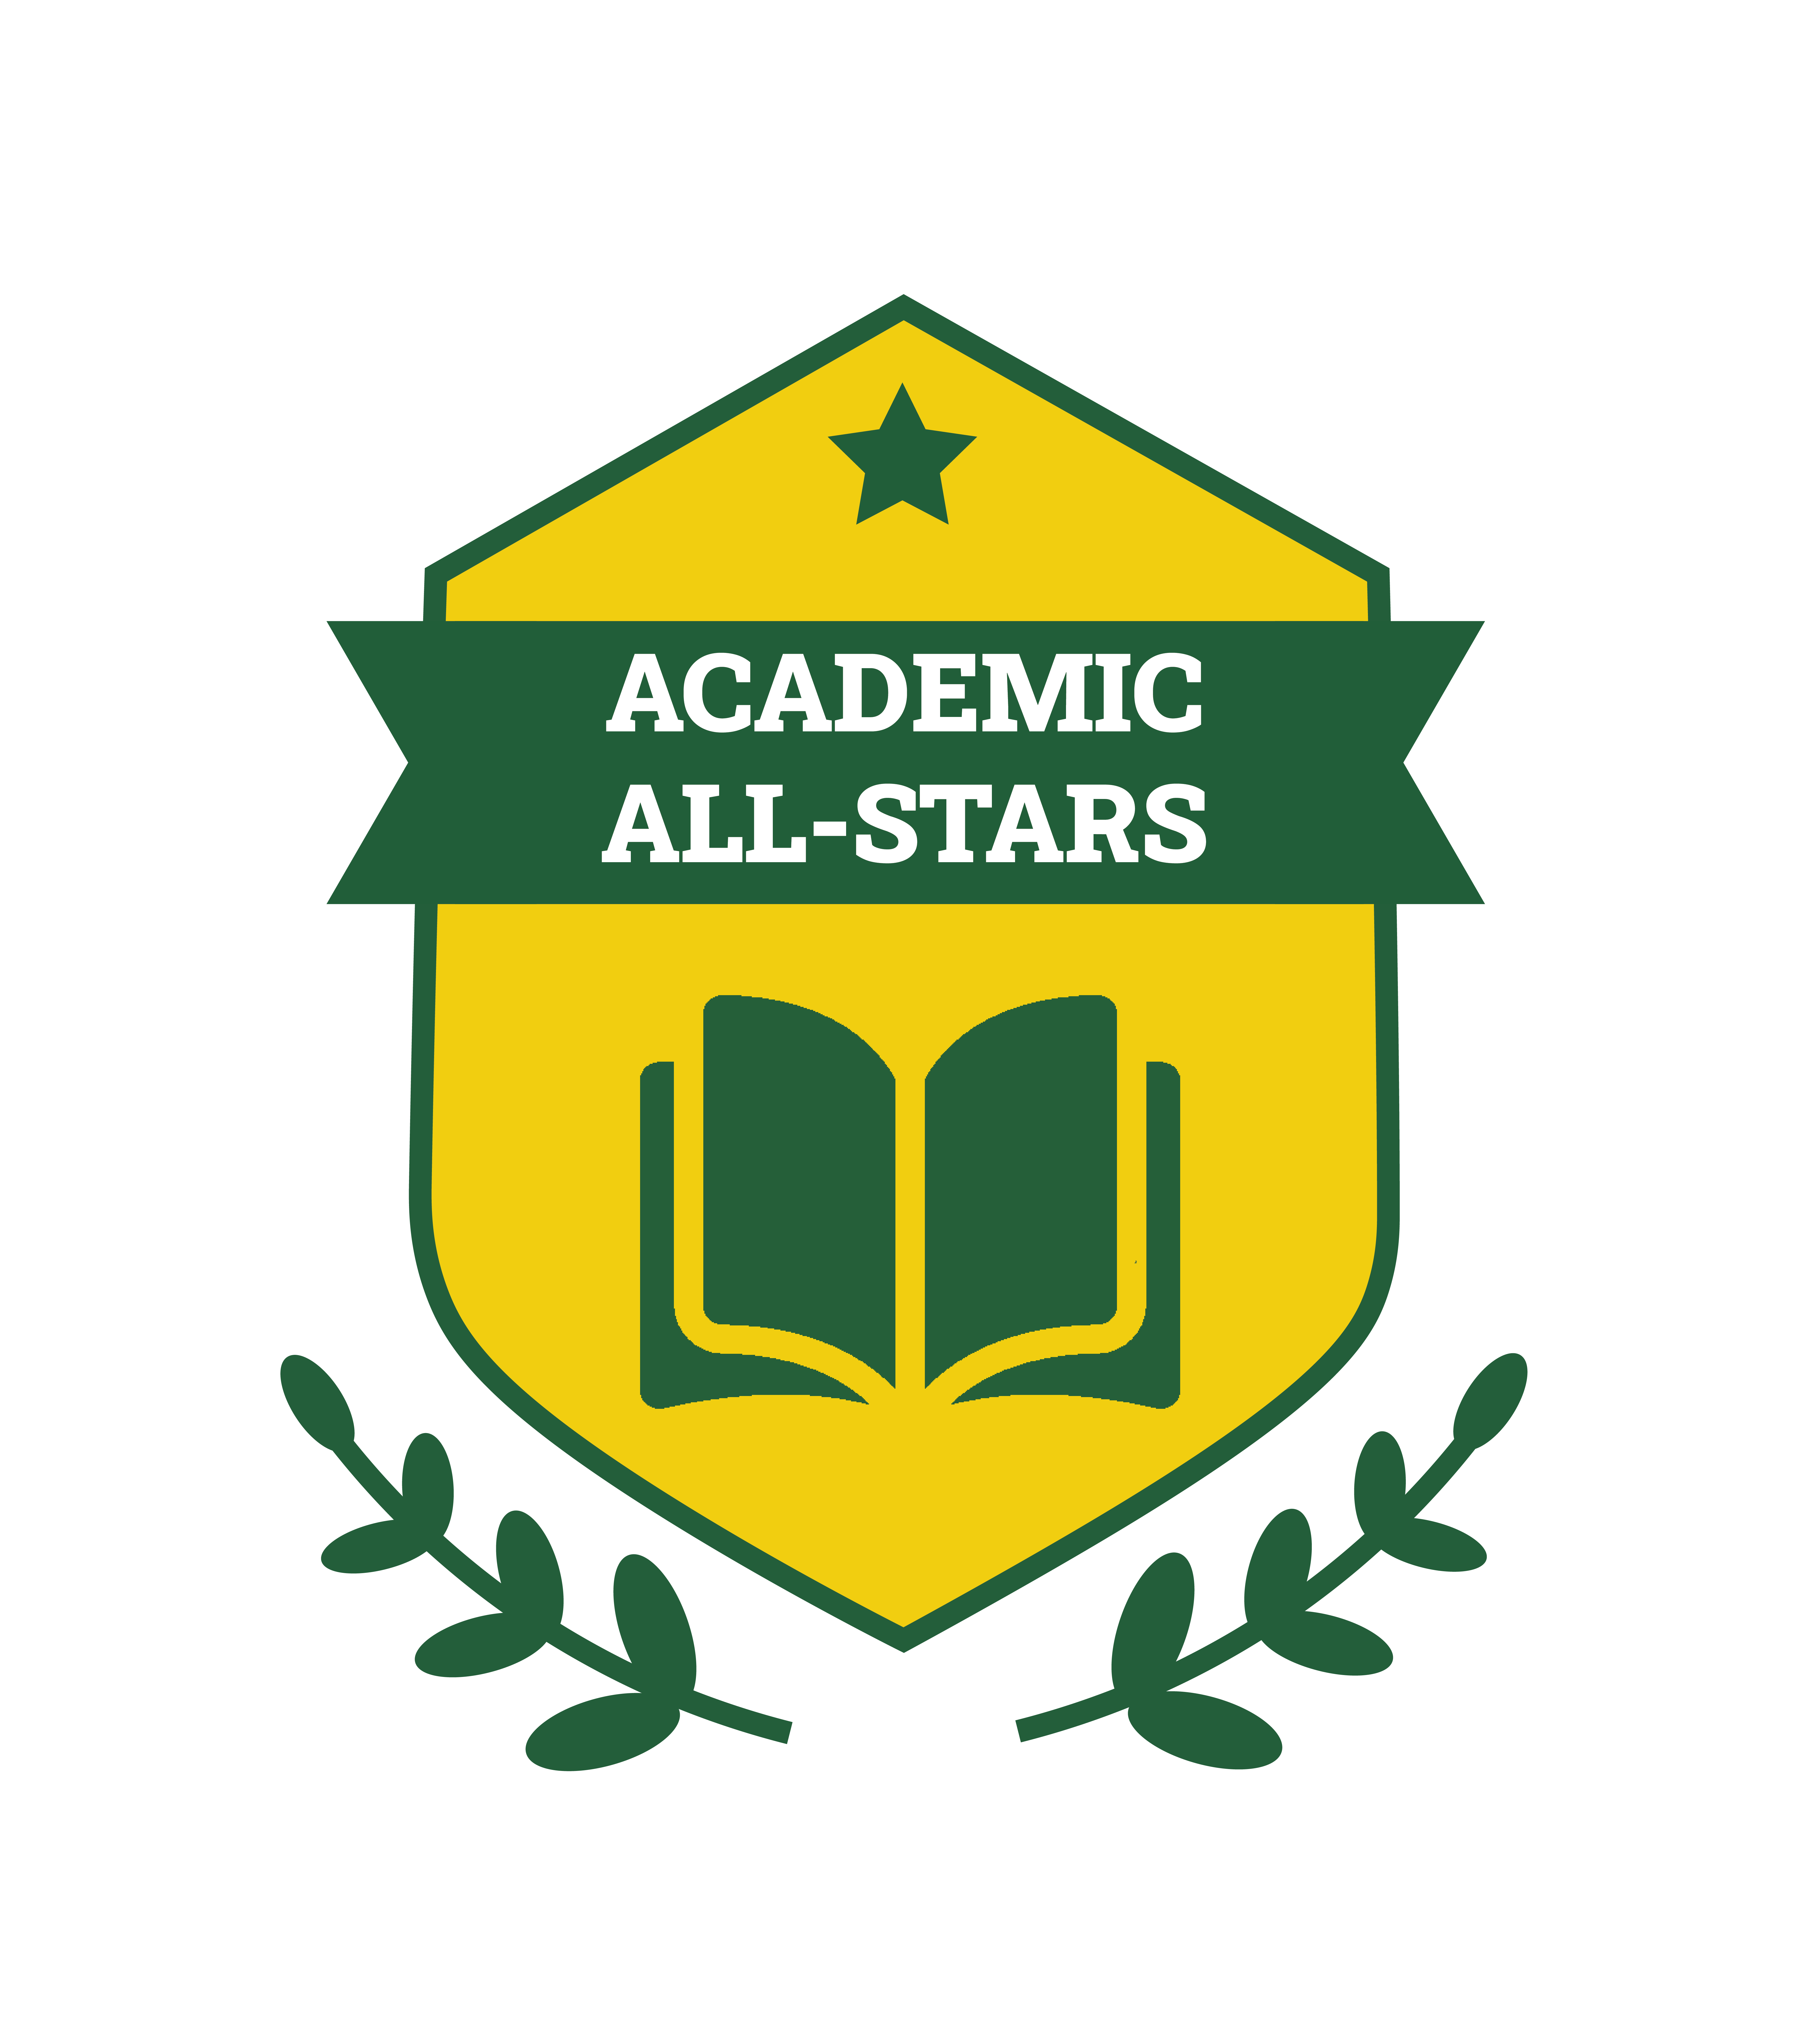 Academic All-Stars logo